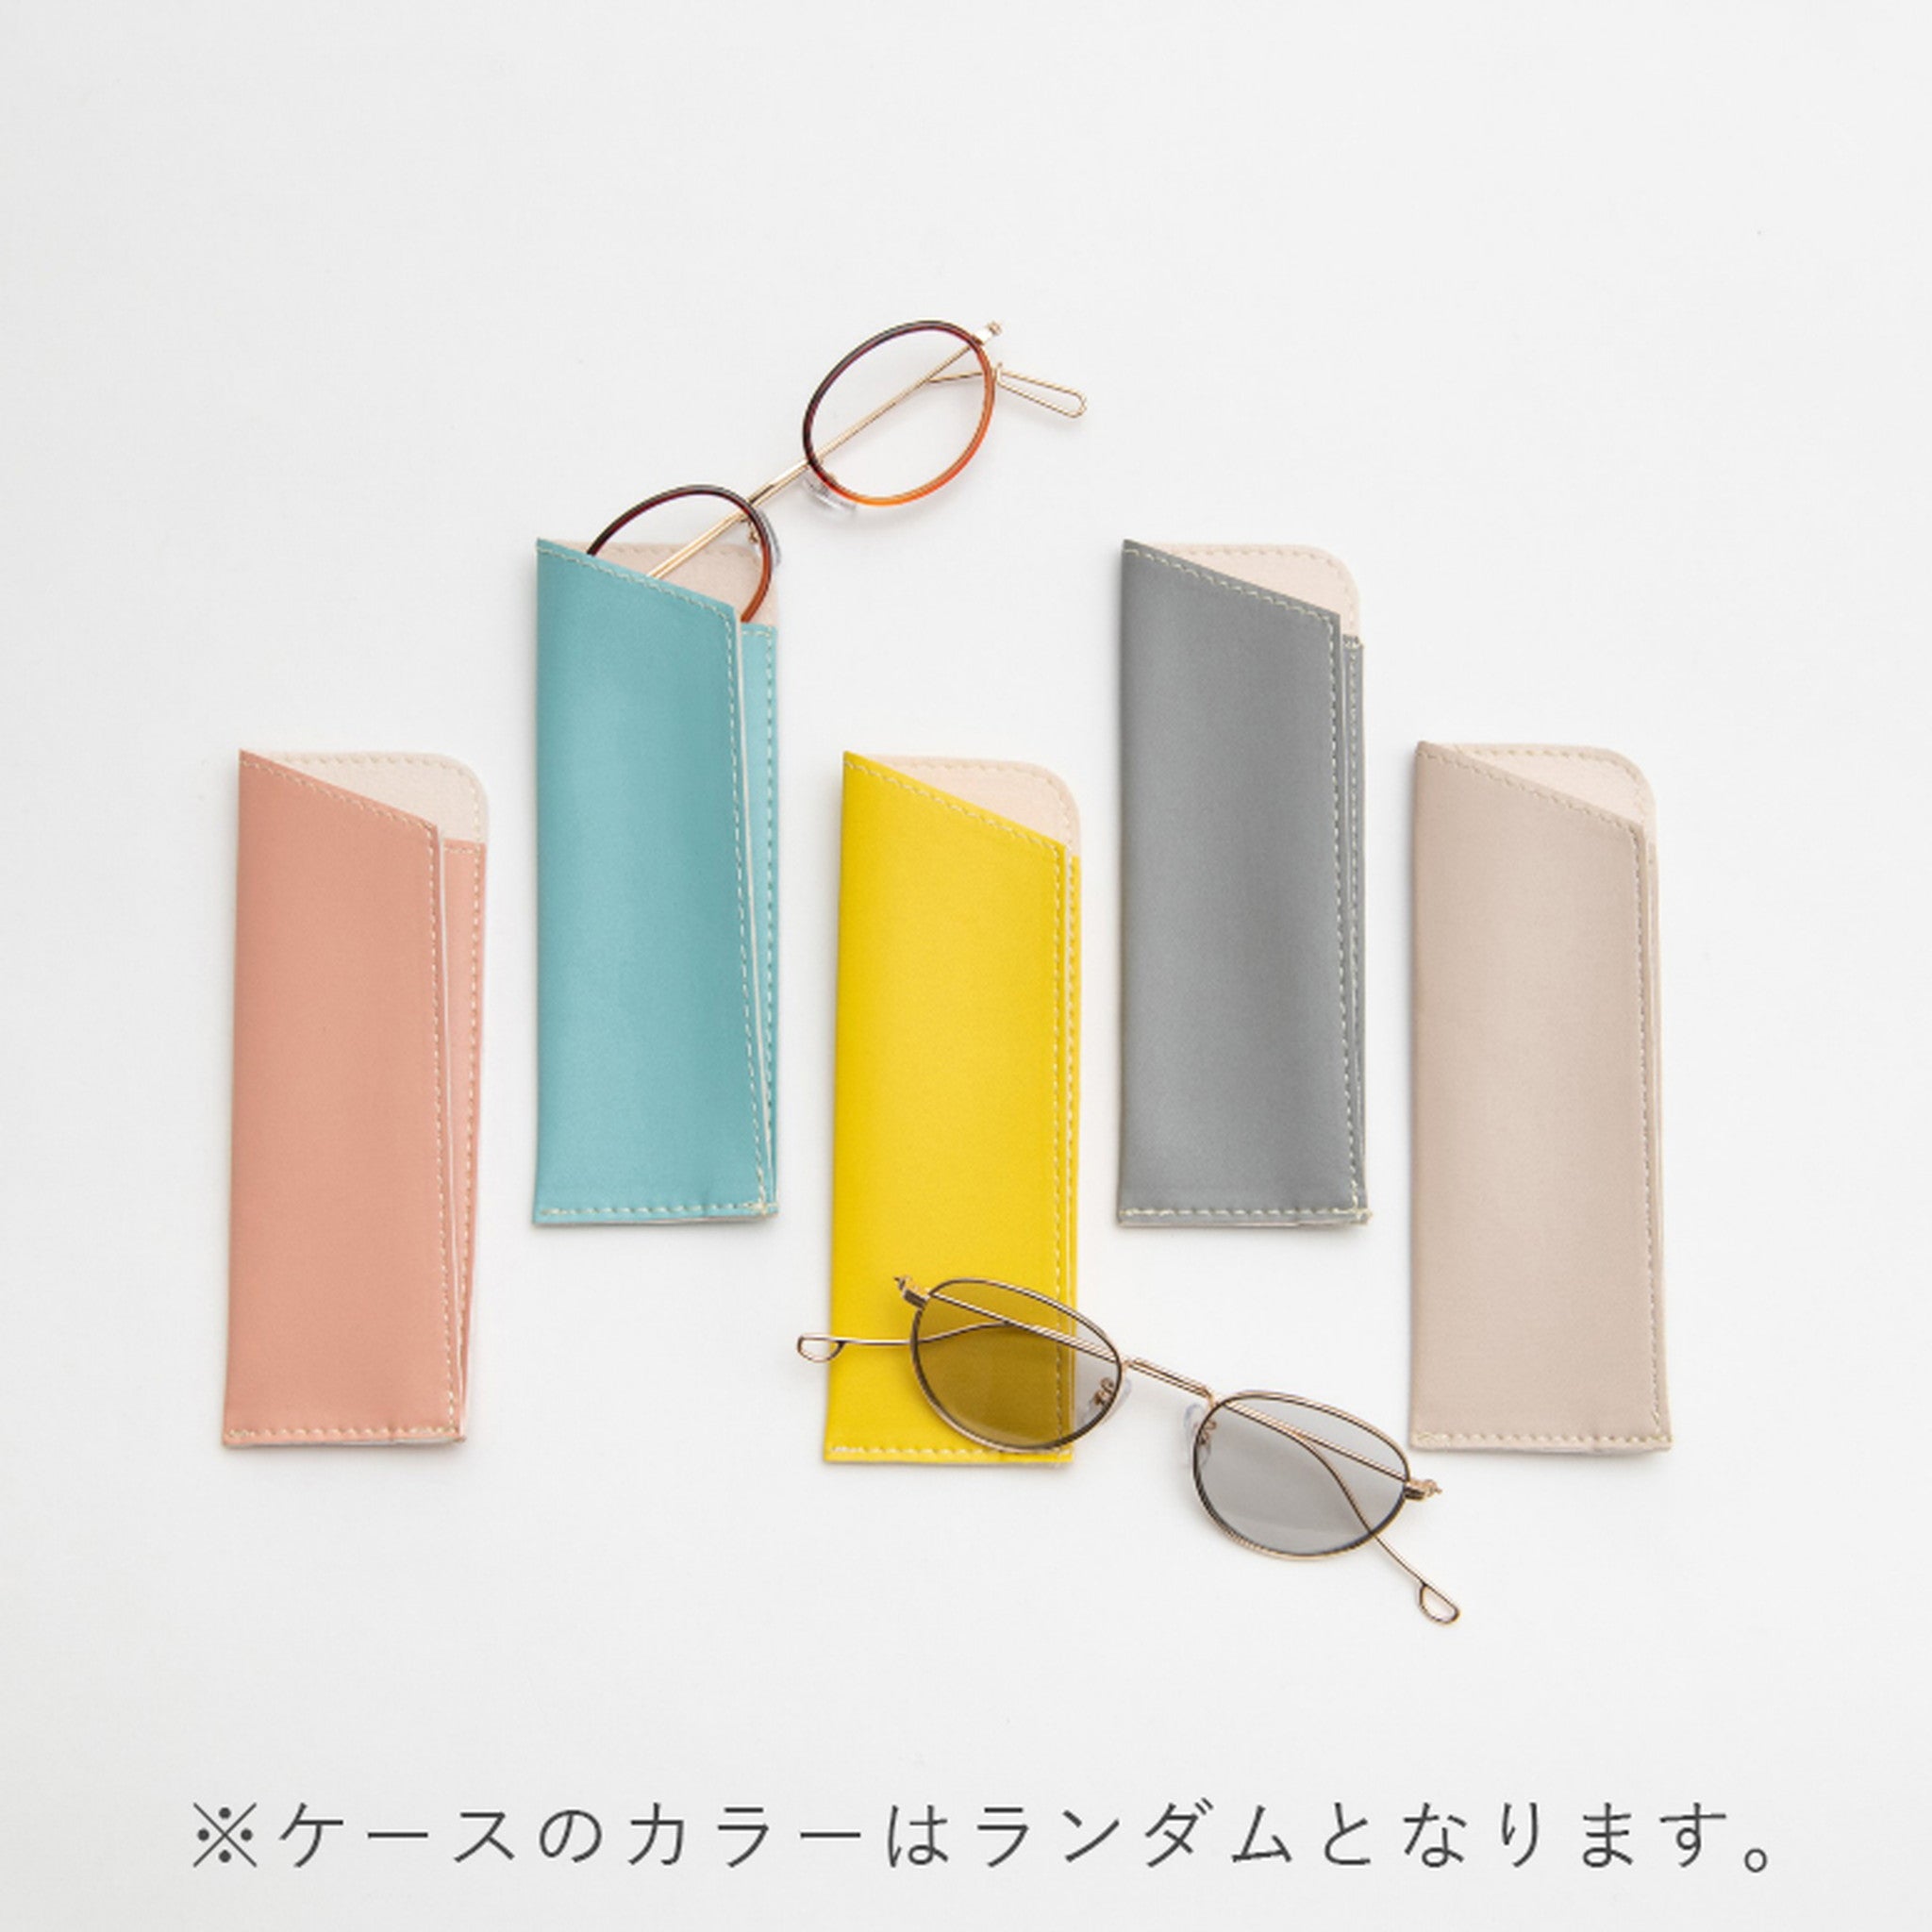 【Ciqi】DONNY サングラス Gray Gray Lens sunglasses(ダニー グレー グレーレンズ)